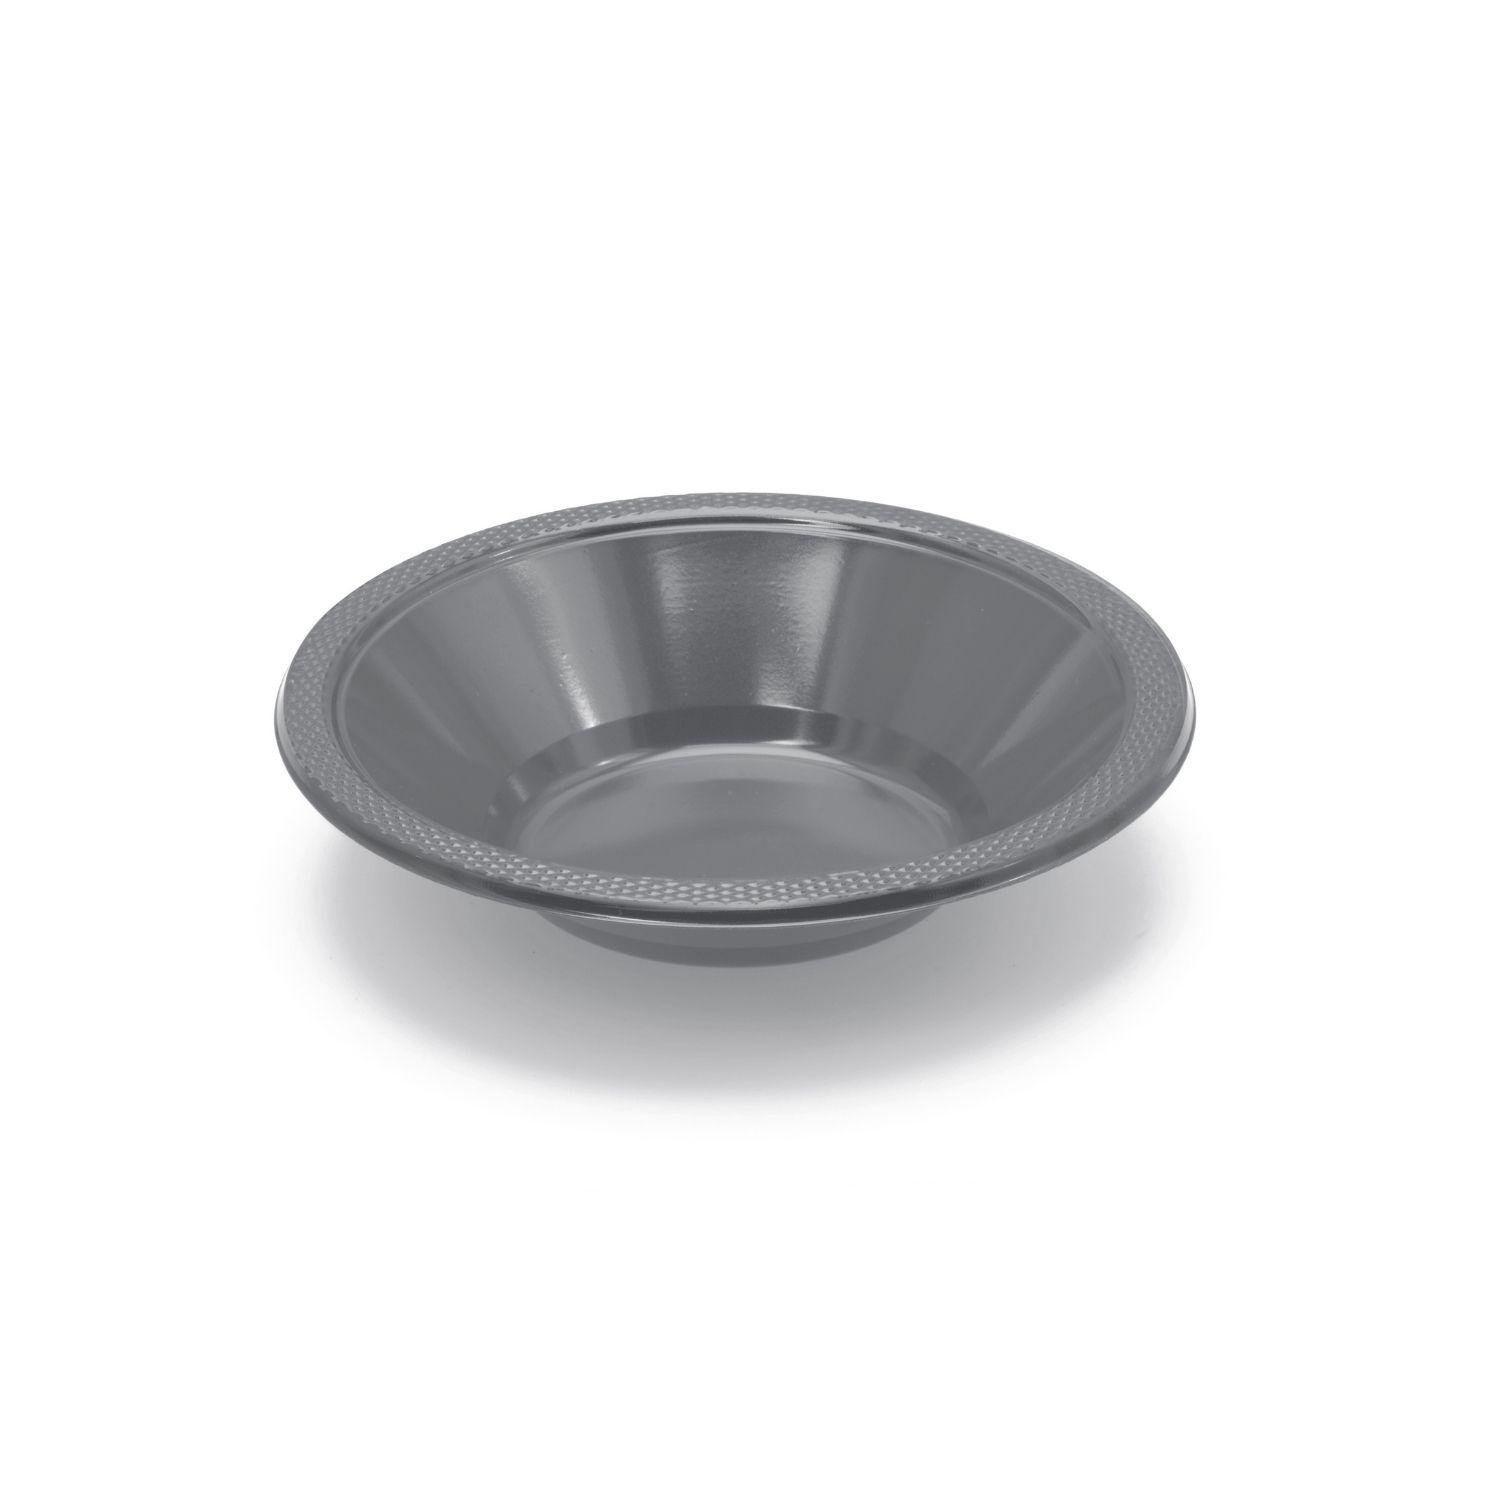 12 Oz. Silver Plastic Bowls - 12 Ct.